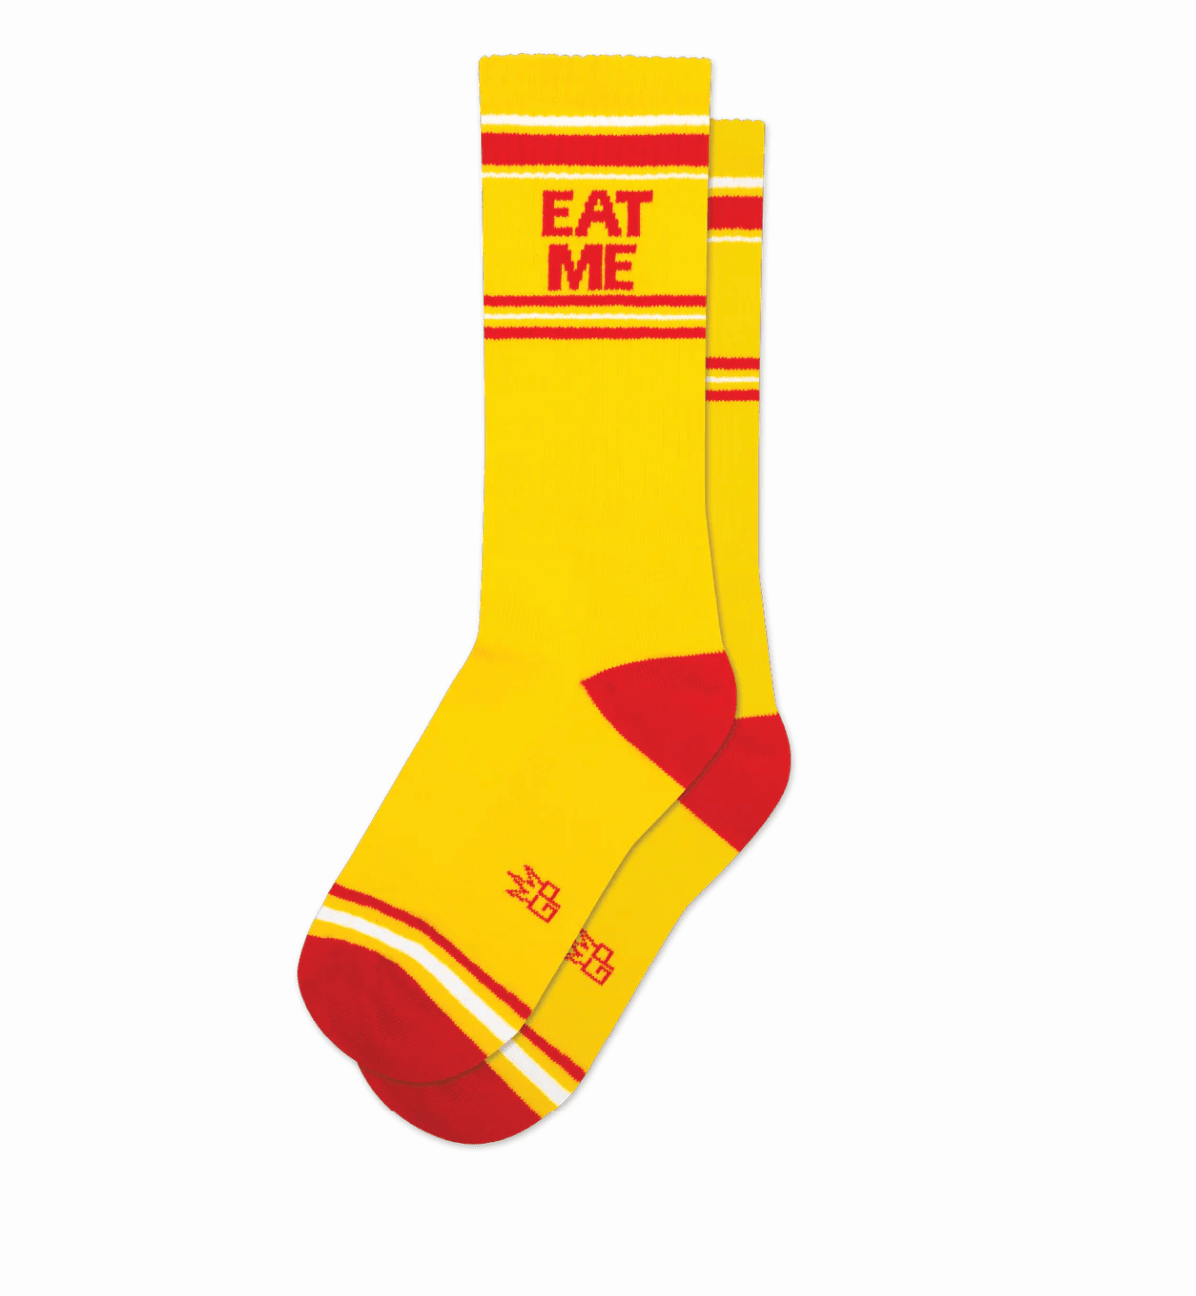 Poodle Socks - Comfy Adult Unisex Socks, Grey and Yellow, Men's Shoe Size  8-11, Women's Shoe Size 6-12